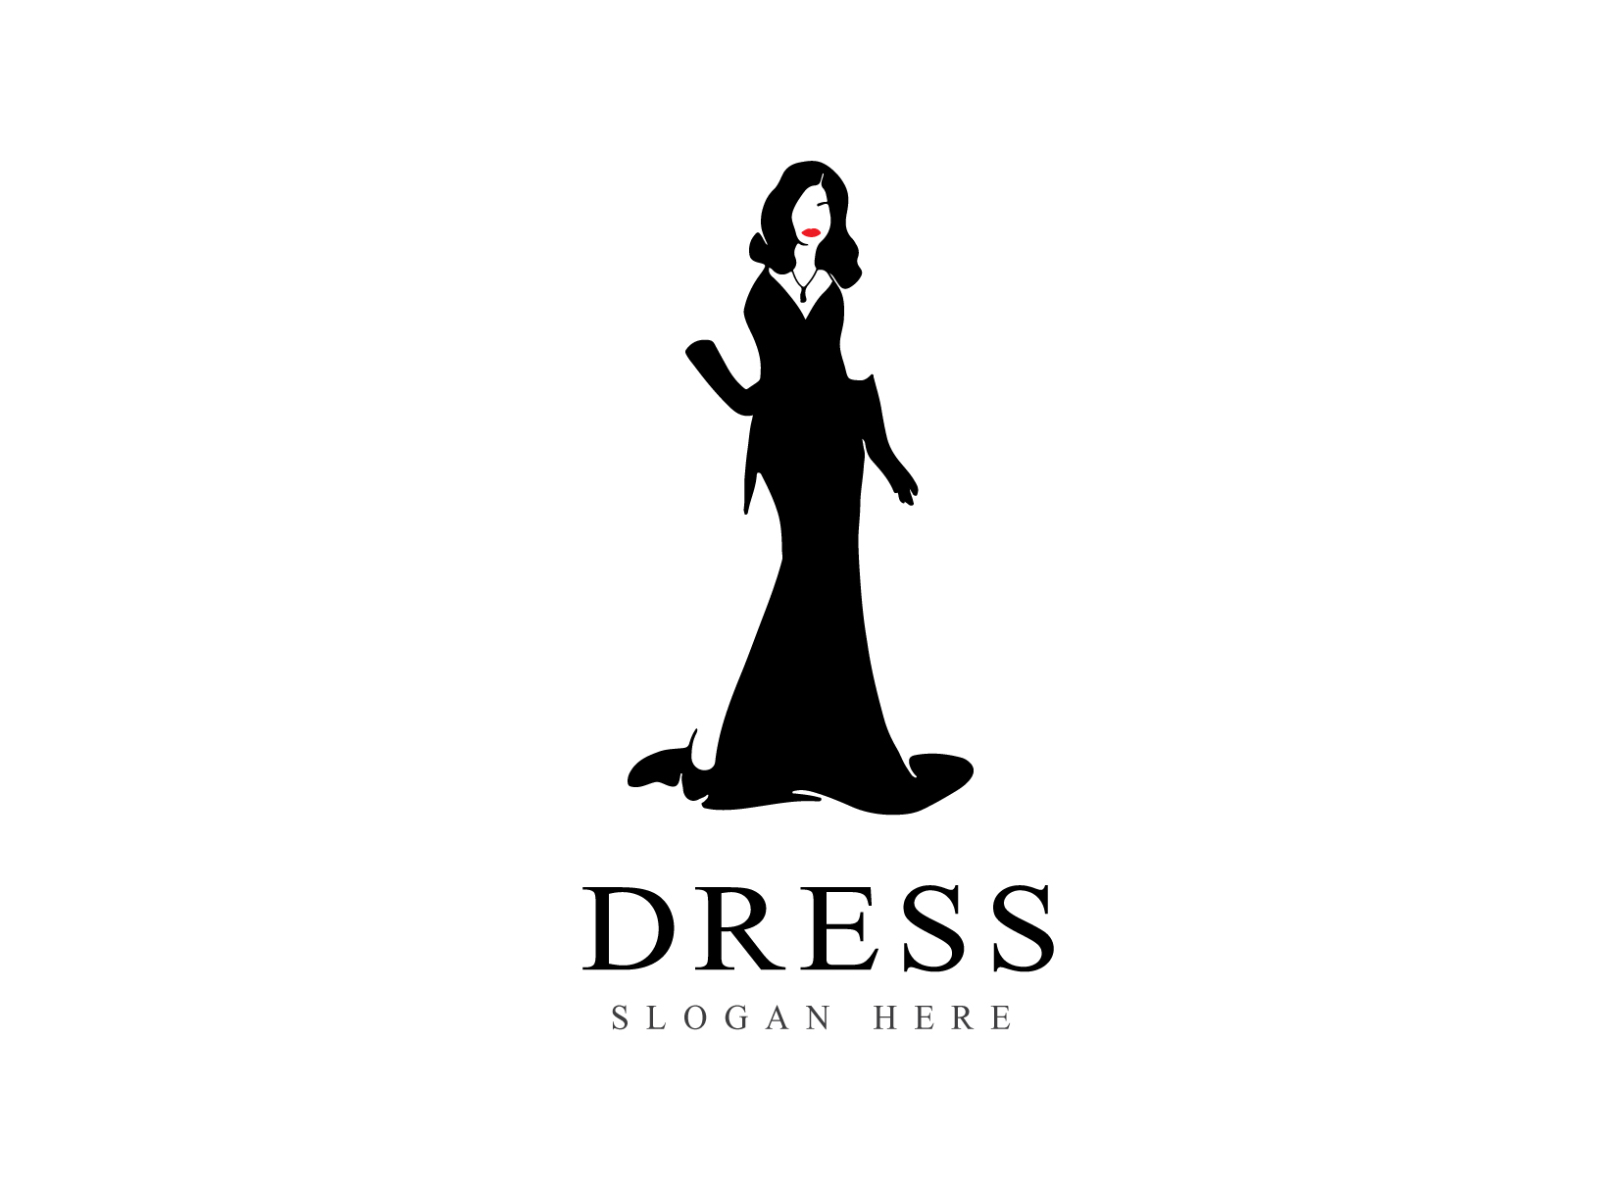 dress logo by Arnadi on Dribbble